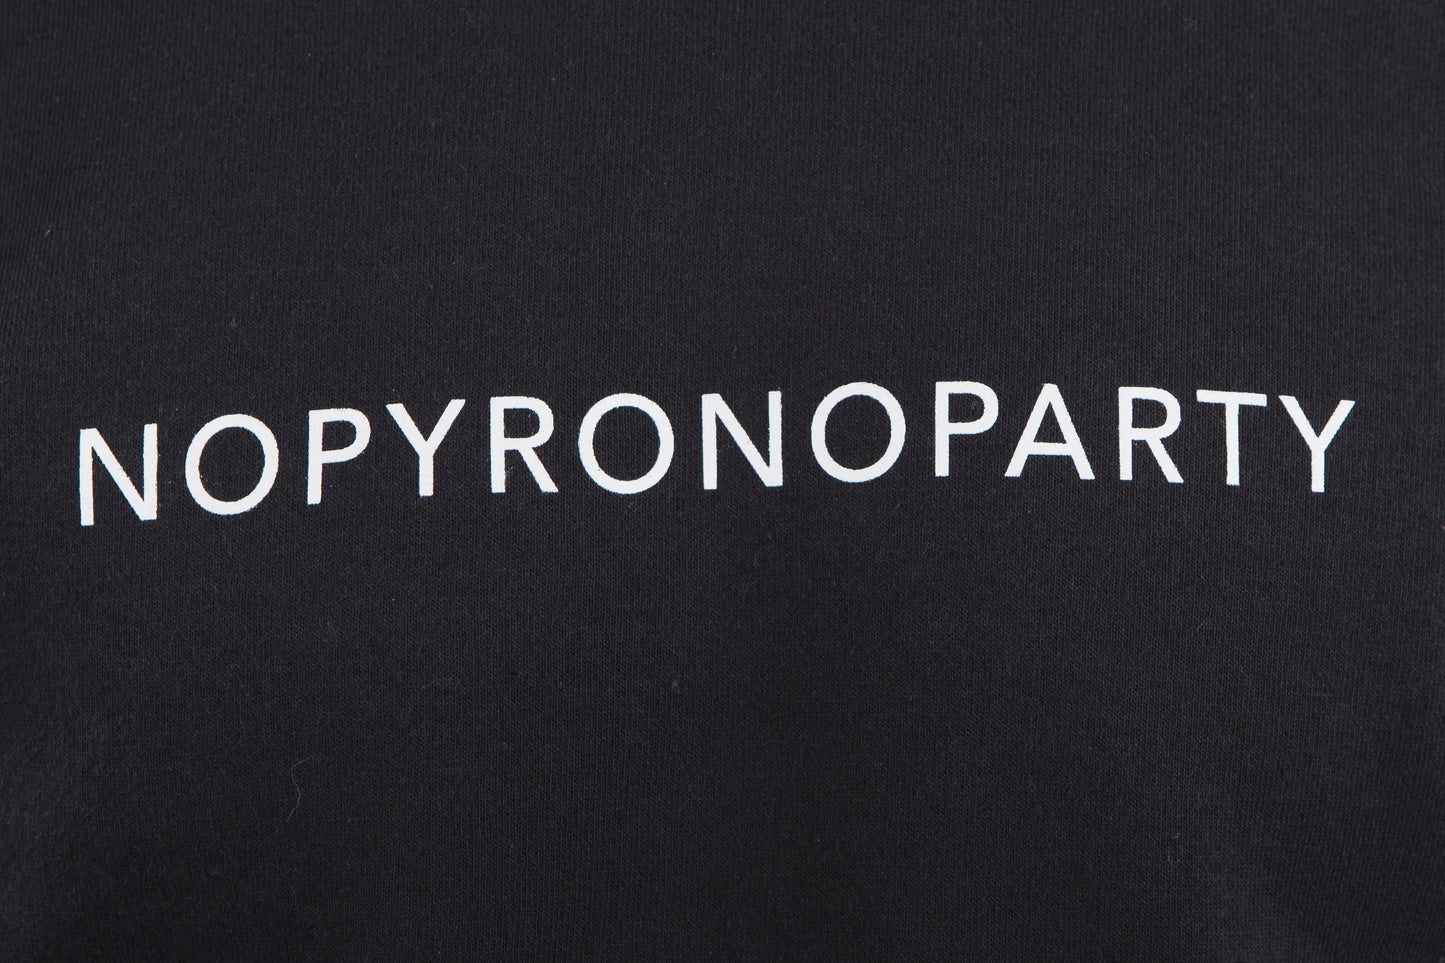 NOPYRONOPARTY (Black)